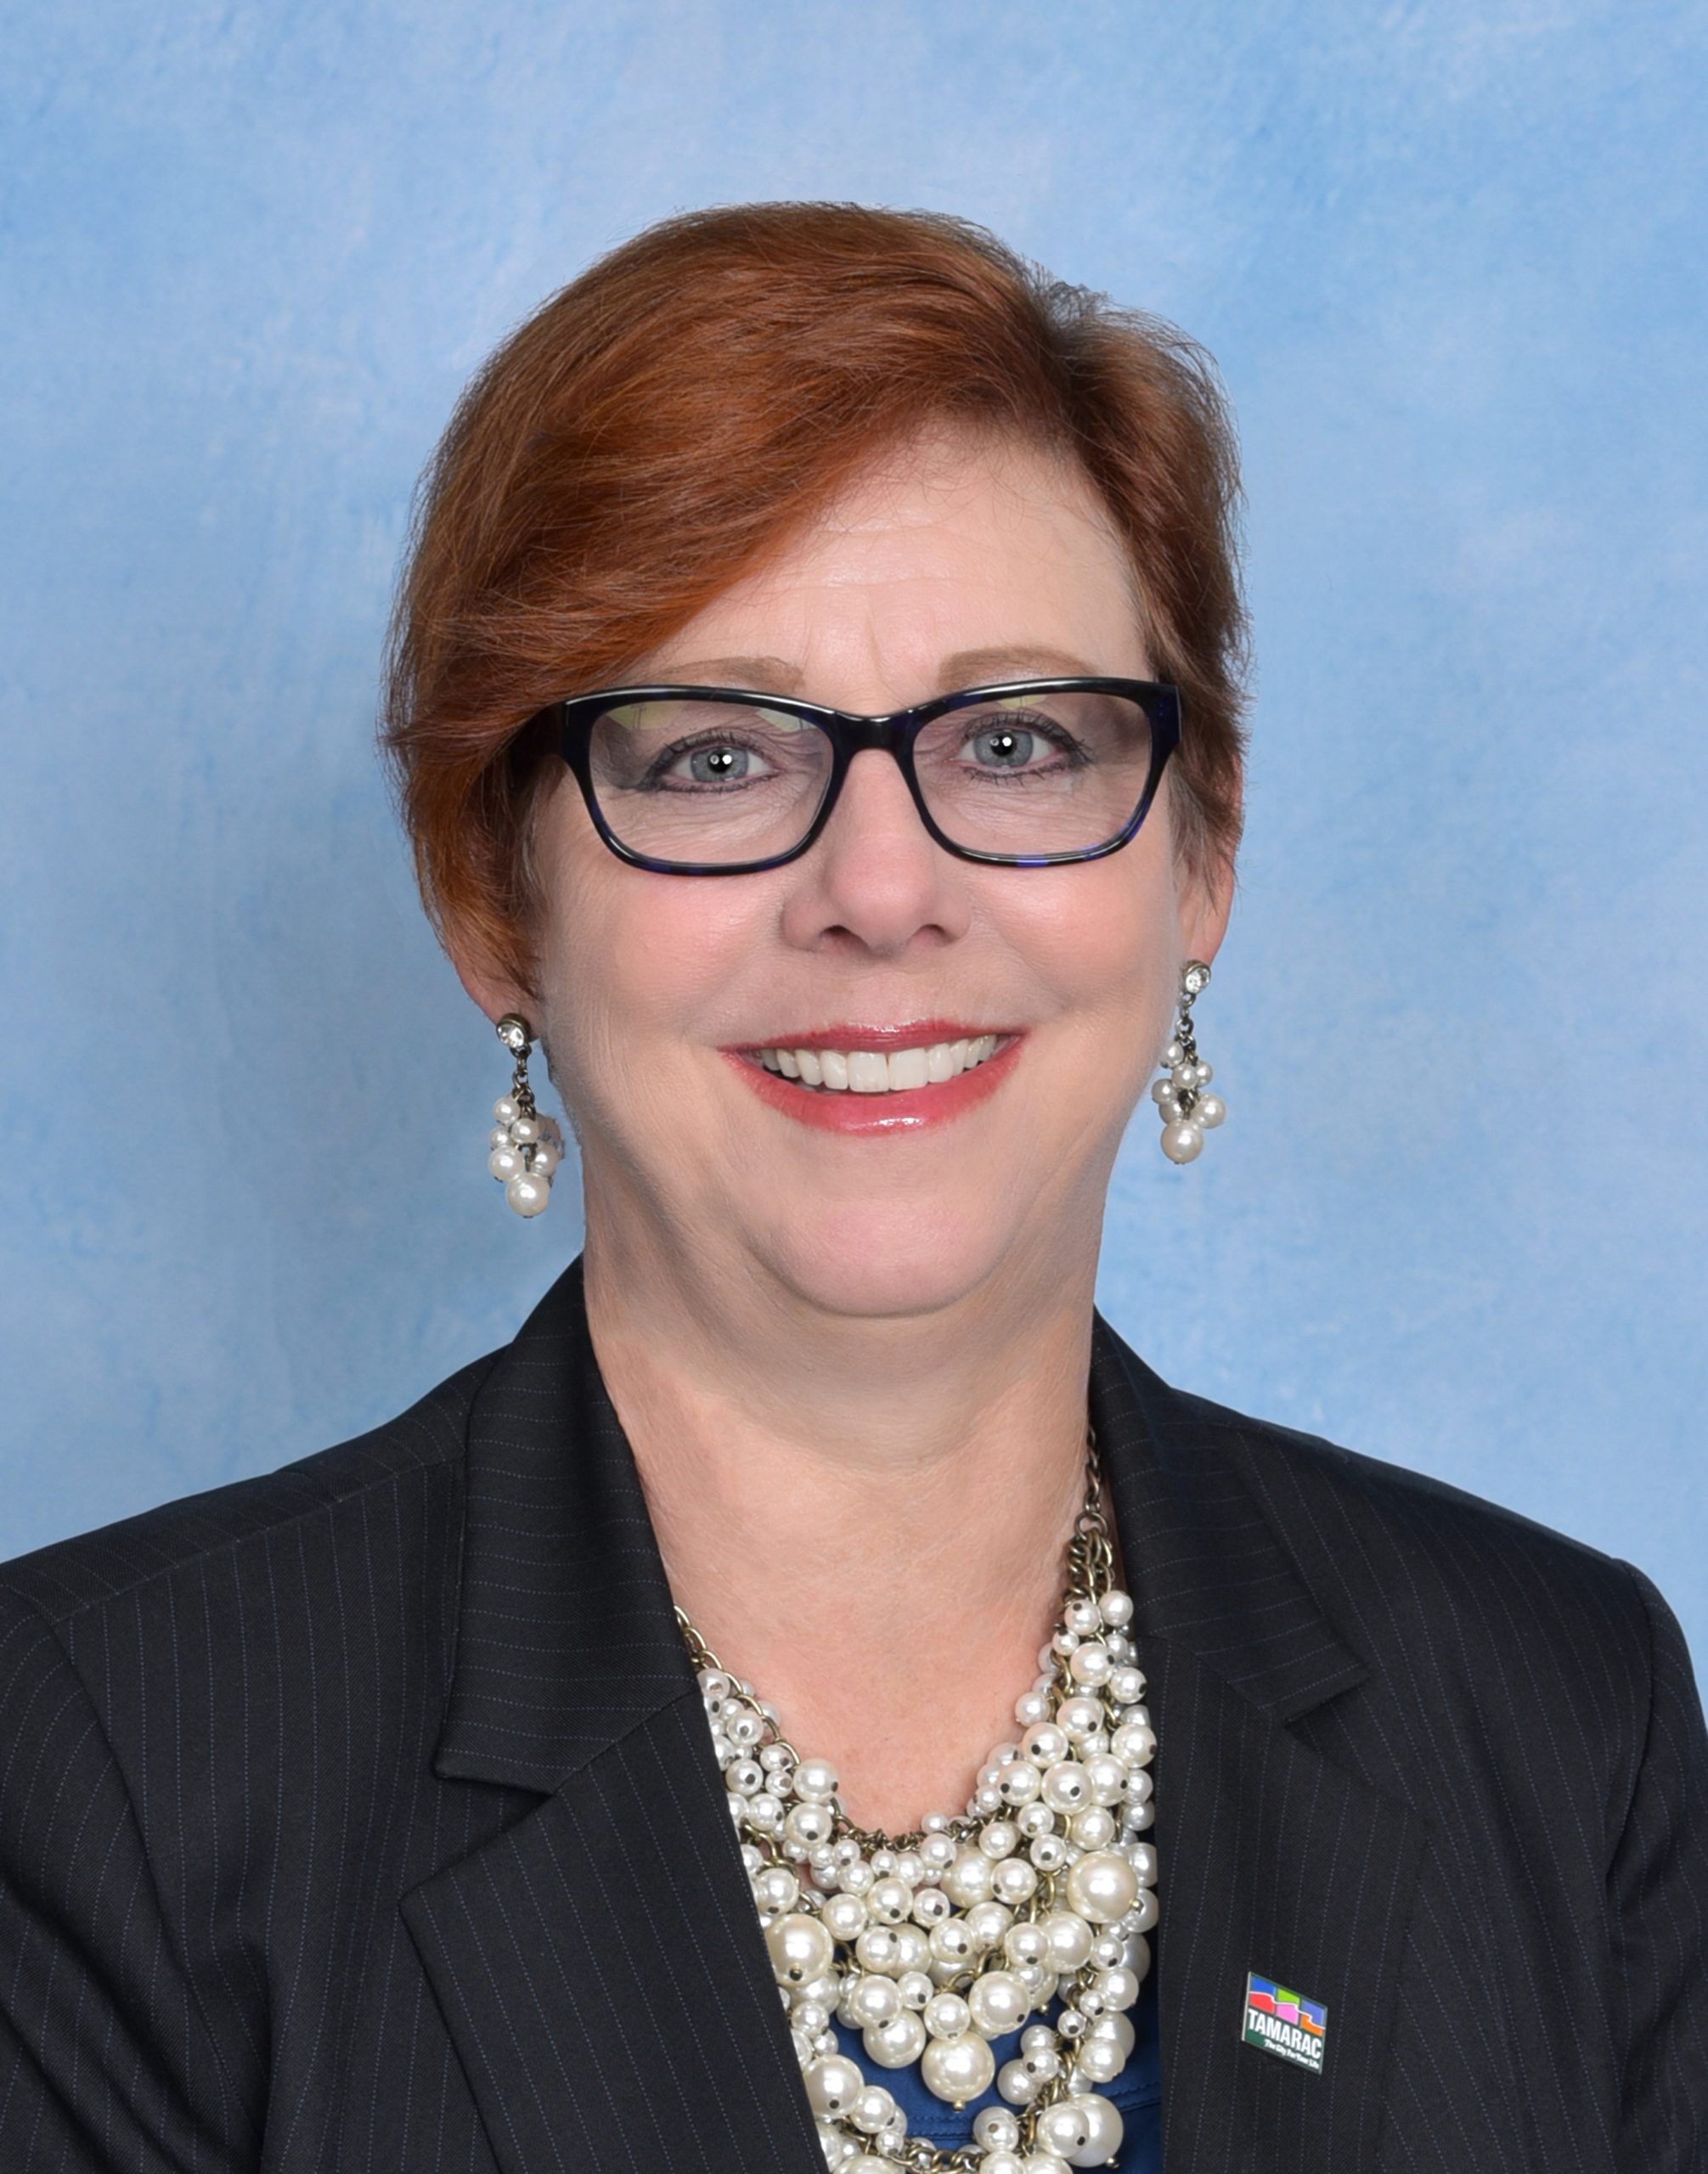 Commissioner Julie Fishman